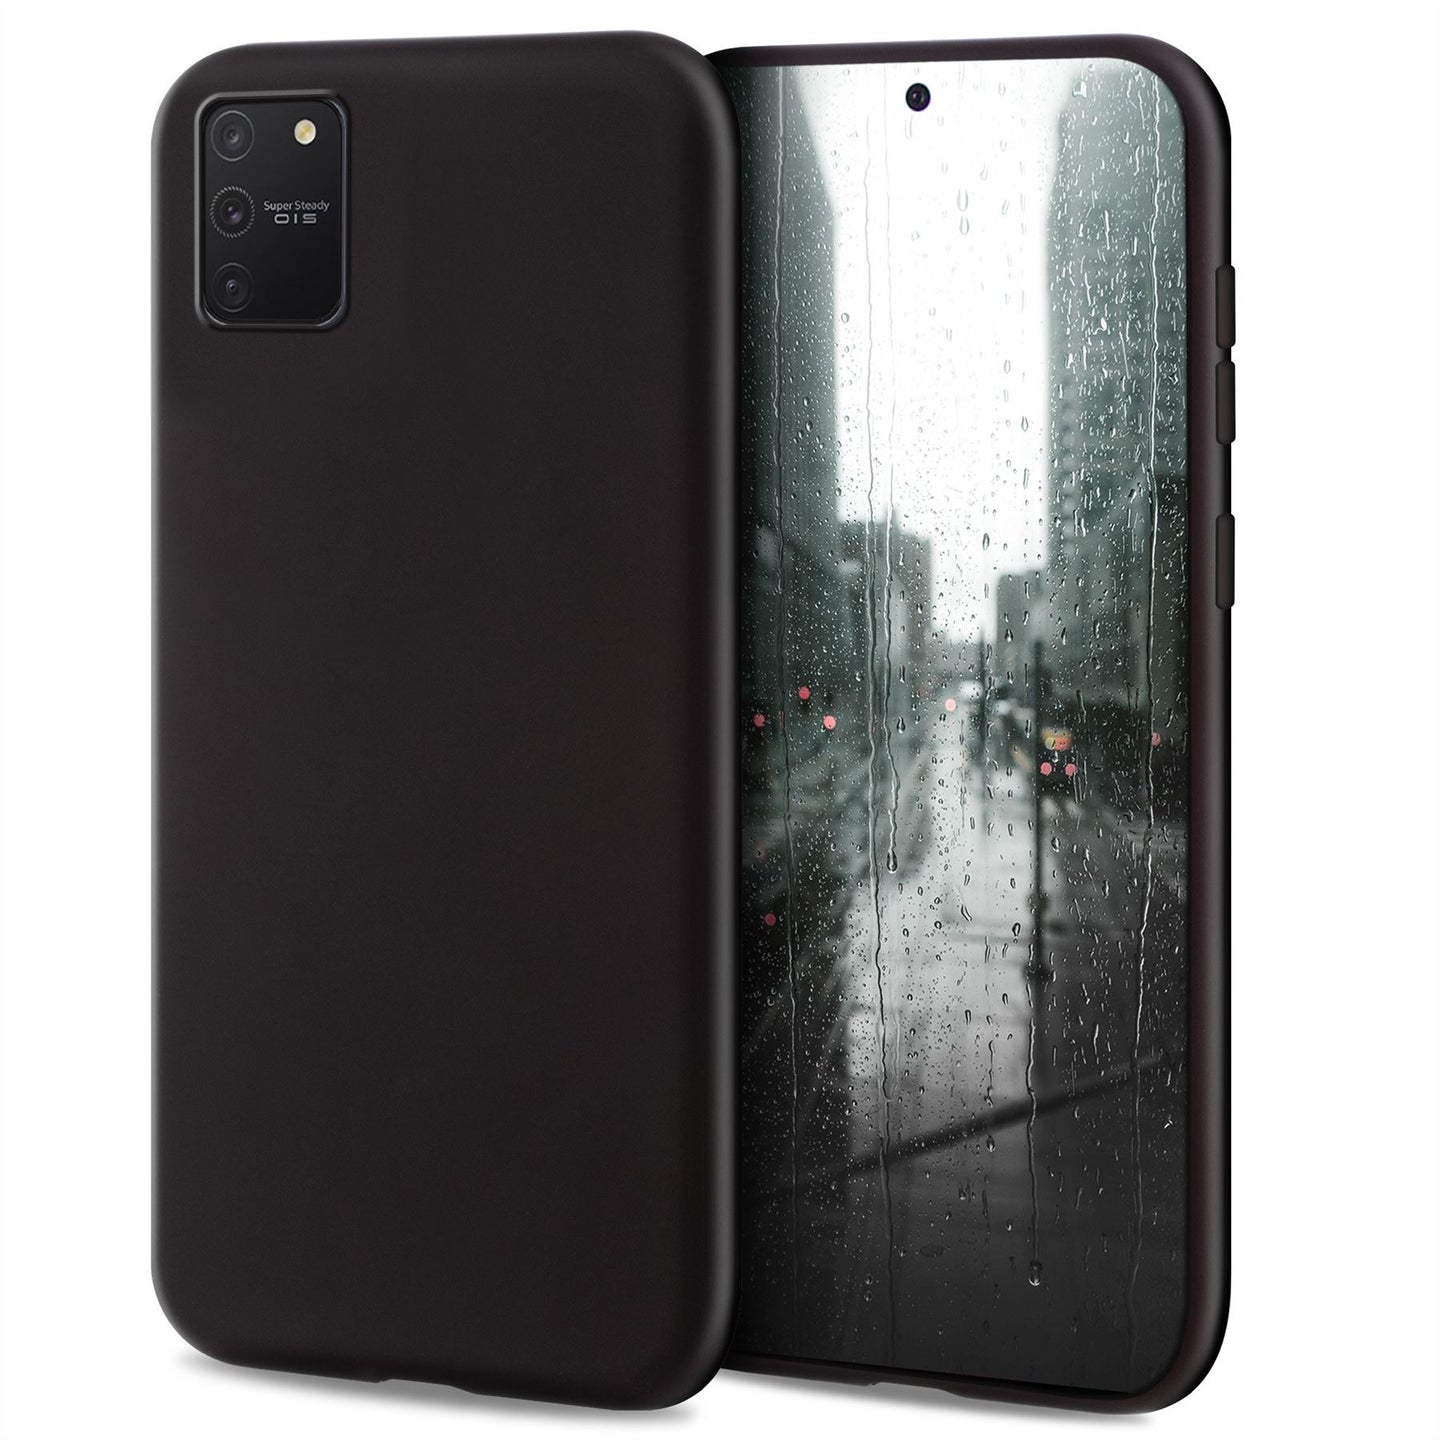 Moozy Minimalist Series Silicone Case for Samsung S10 Lite, Black - Matte Finish Slim Soft TPU Cover